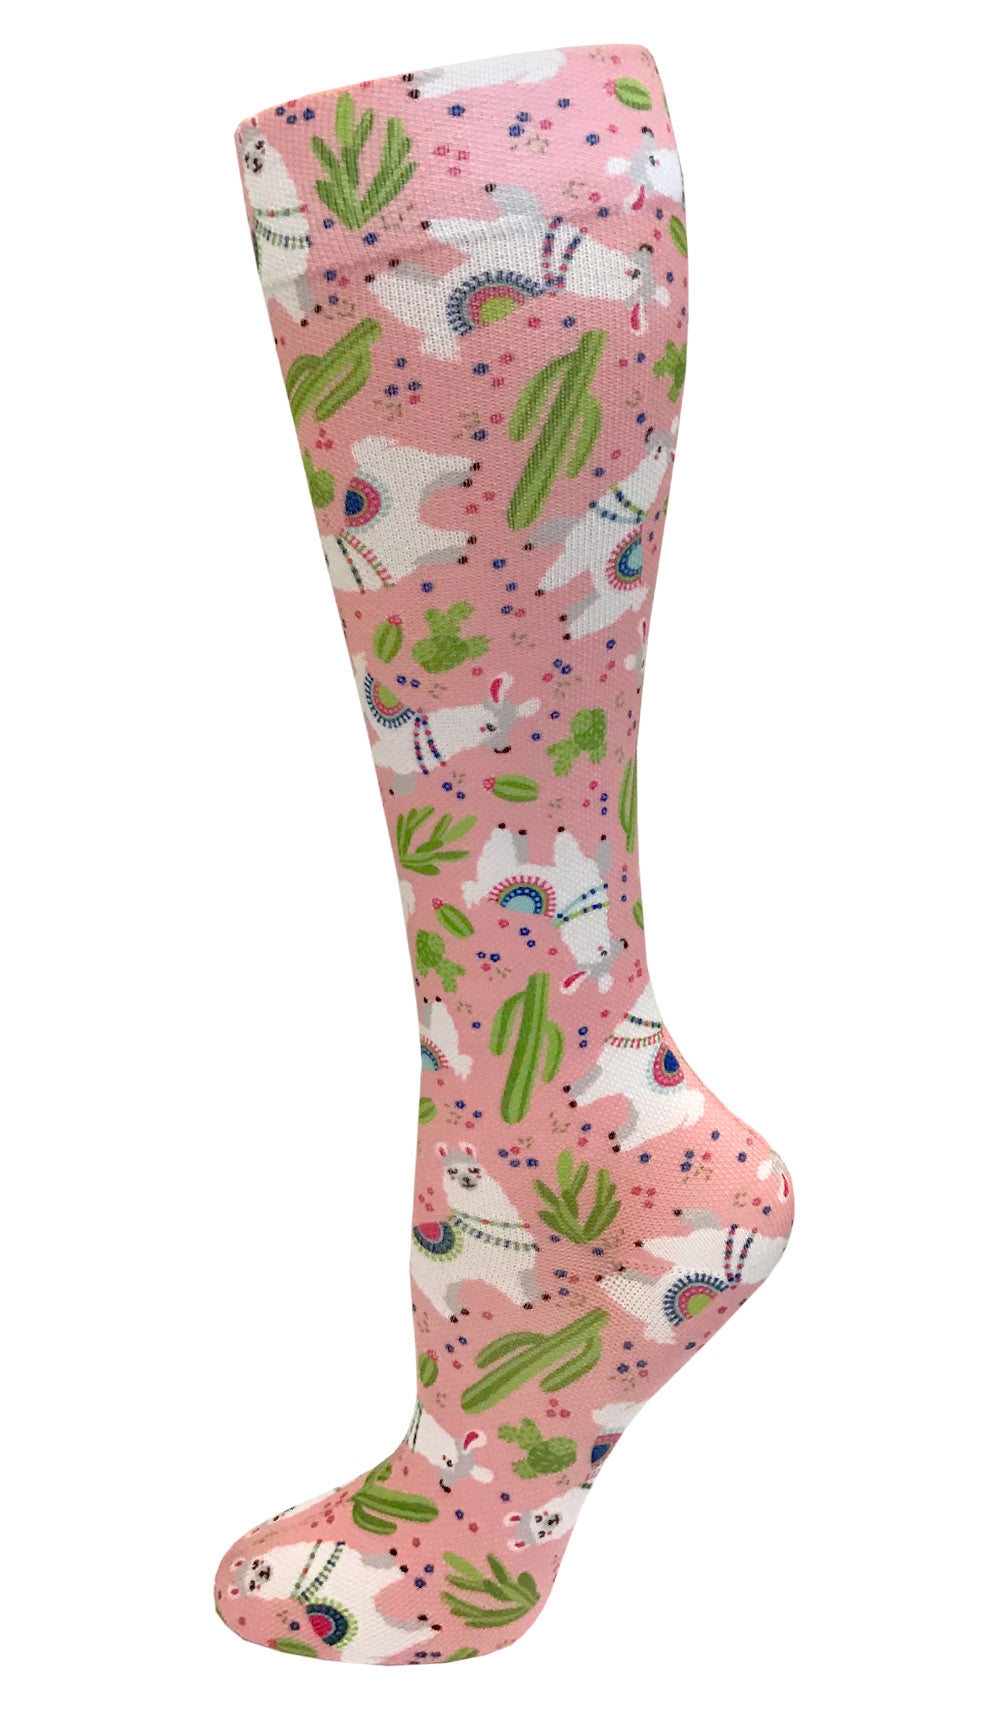 12" Soft Comfort Compression Socks by Prestige /  Llamas Pink